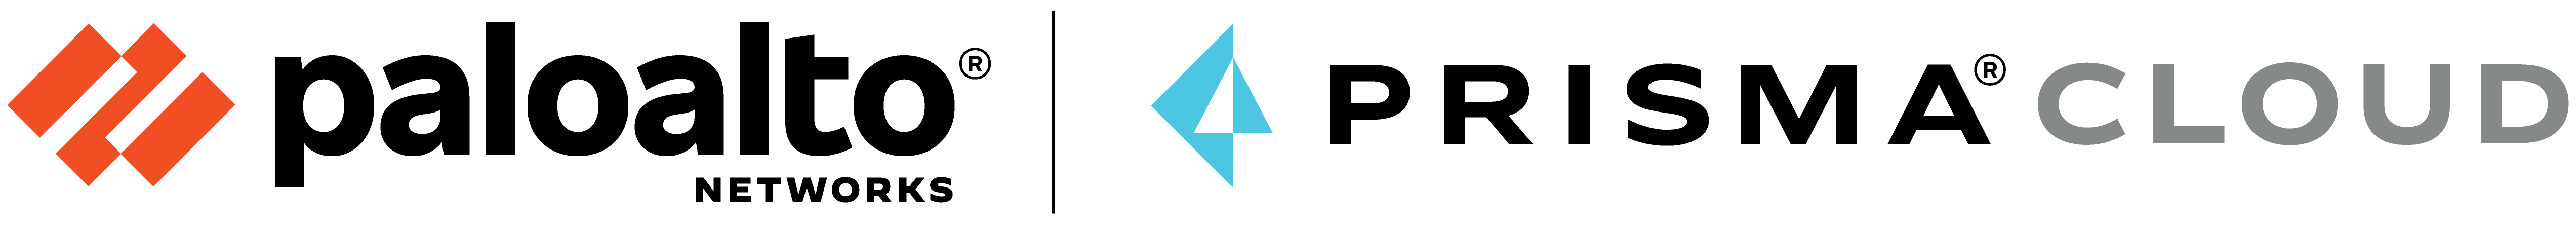 Palo Alto Networks logo